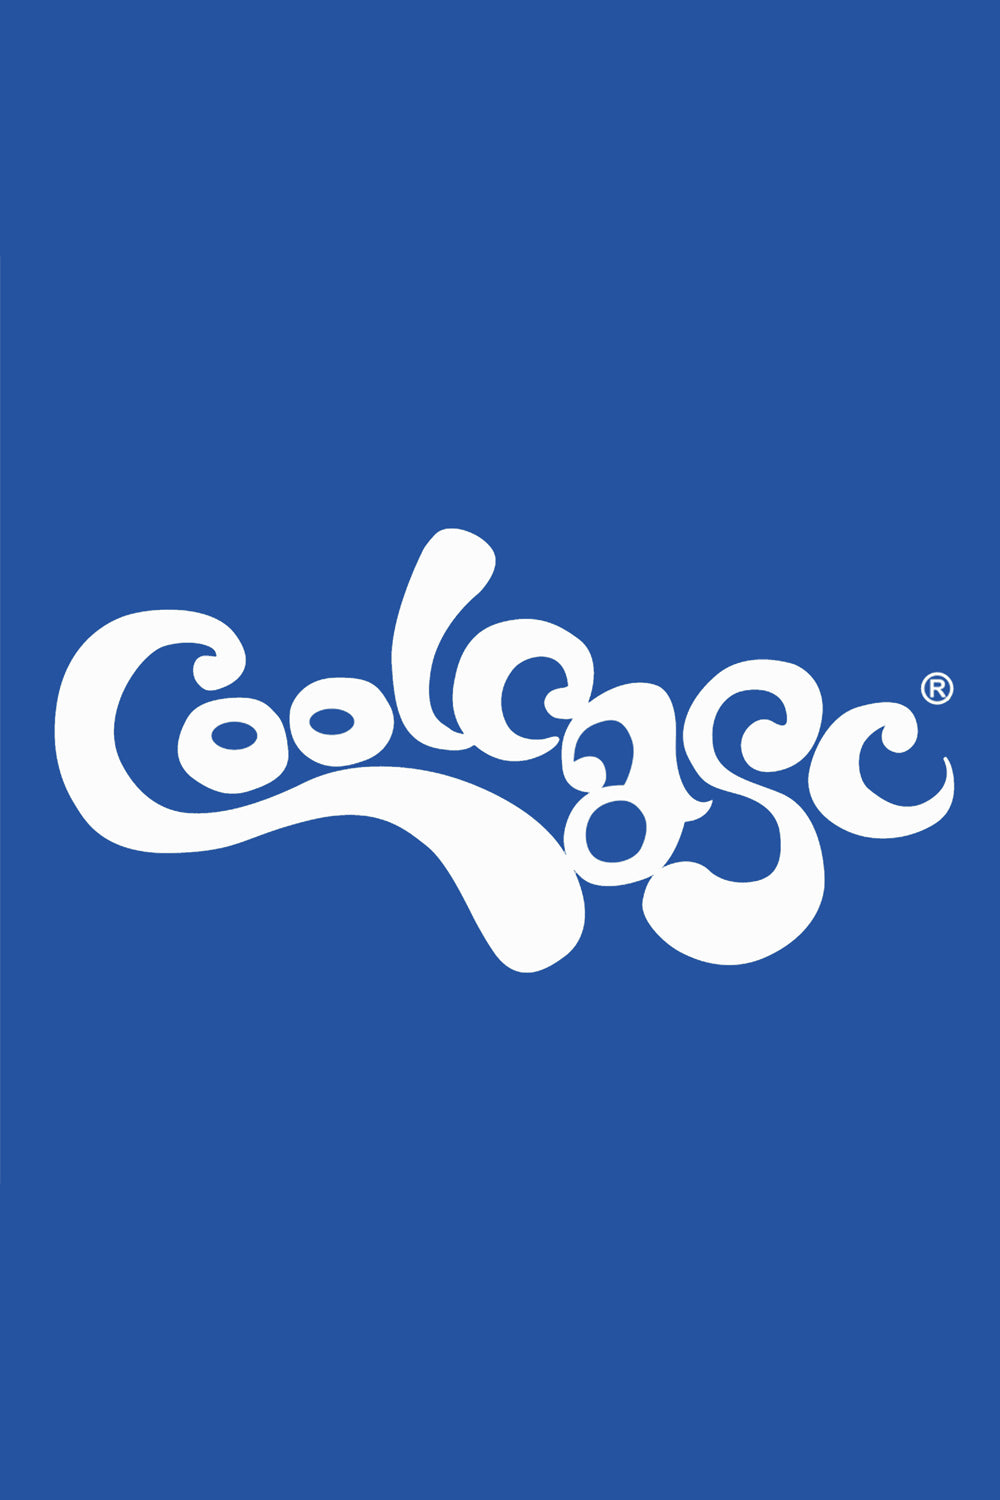 CoolCasc